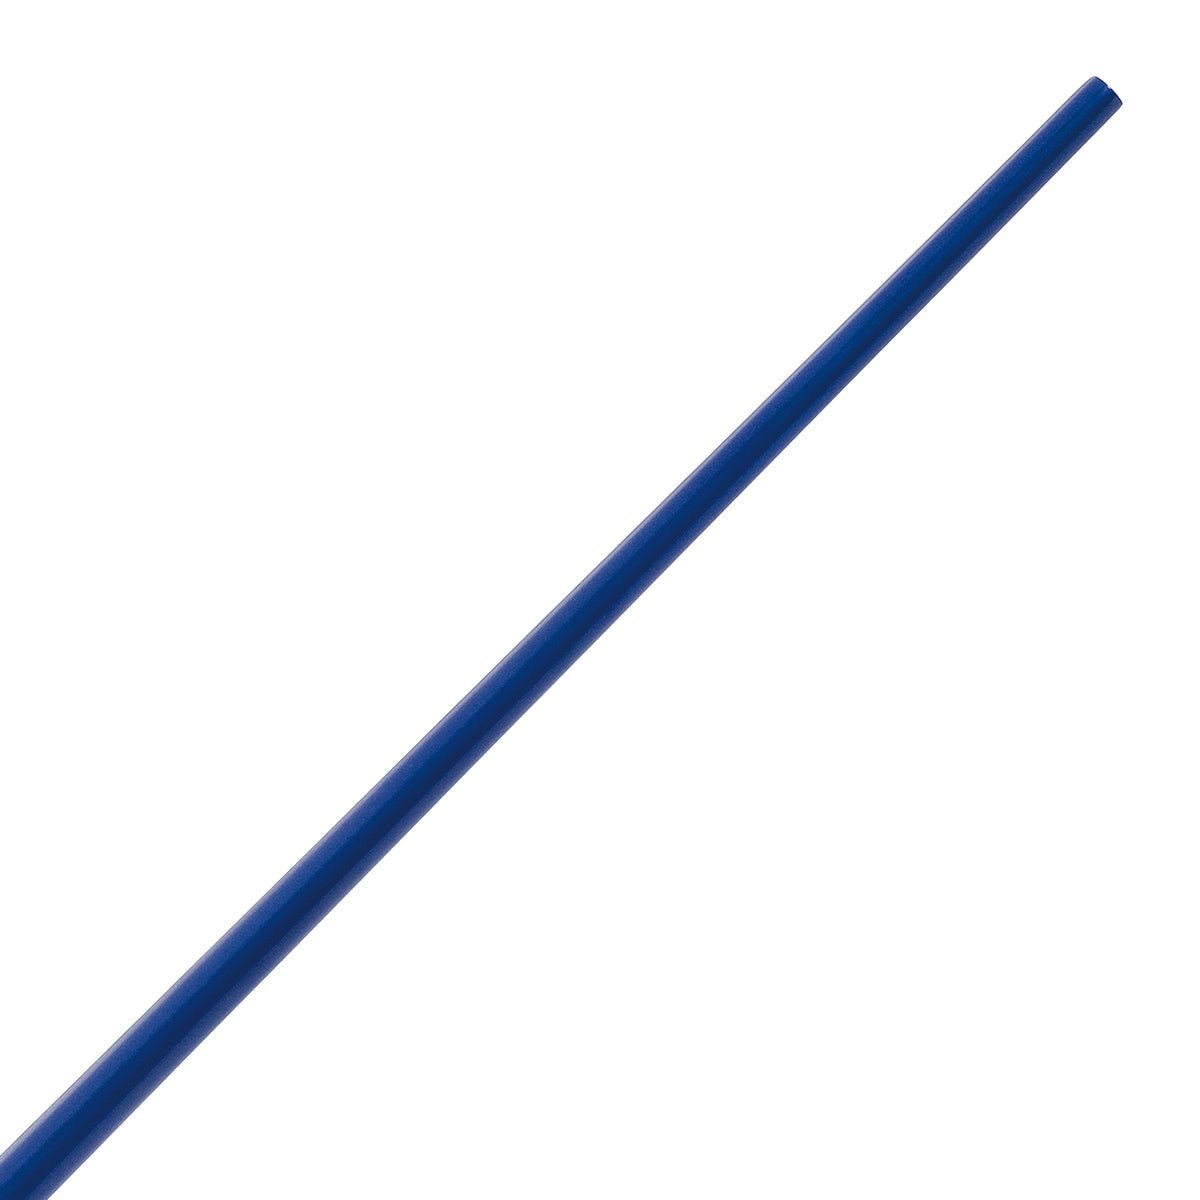 Collapsible Graphite Bo Staff Blue